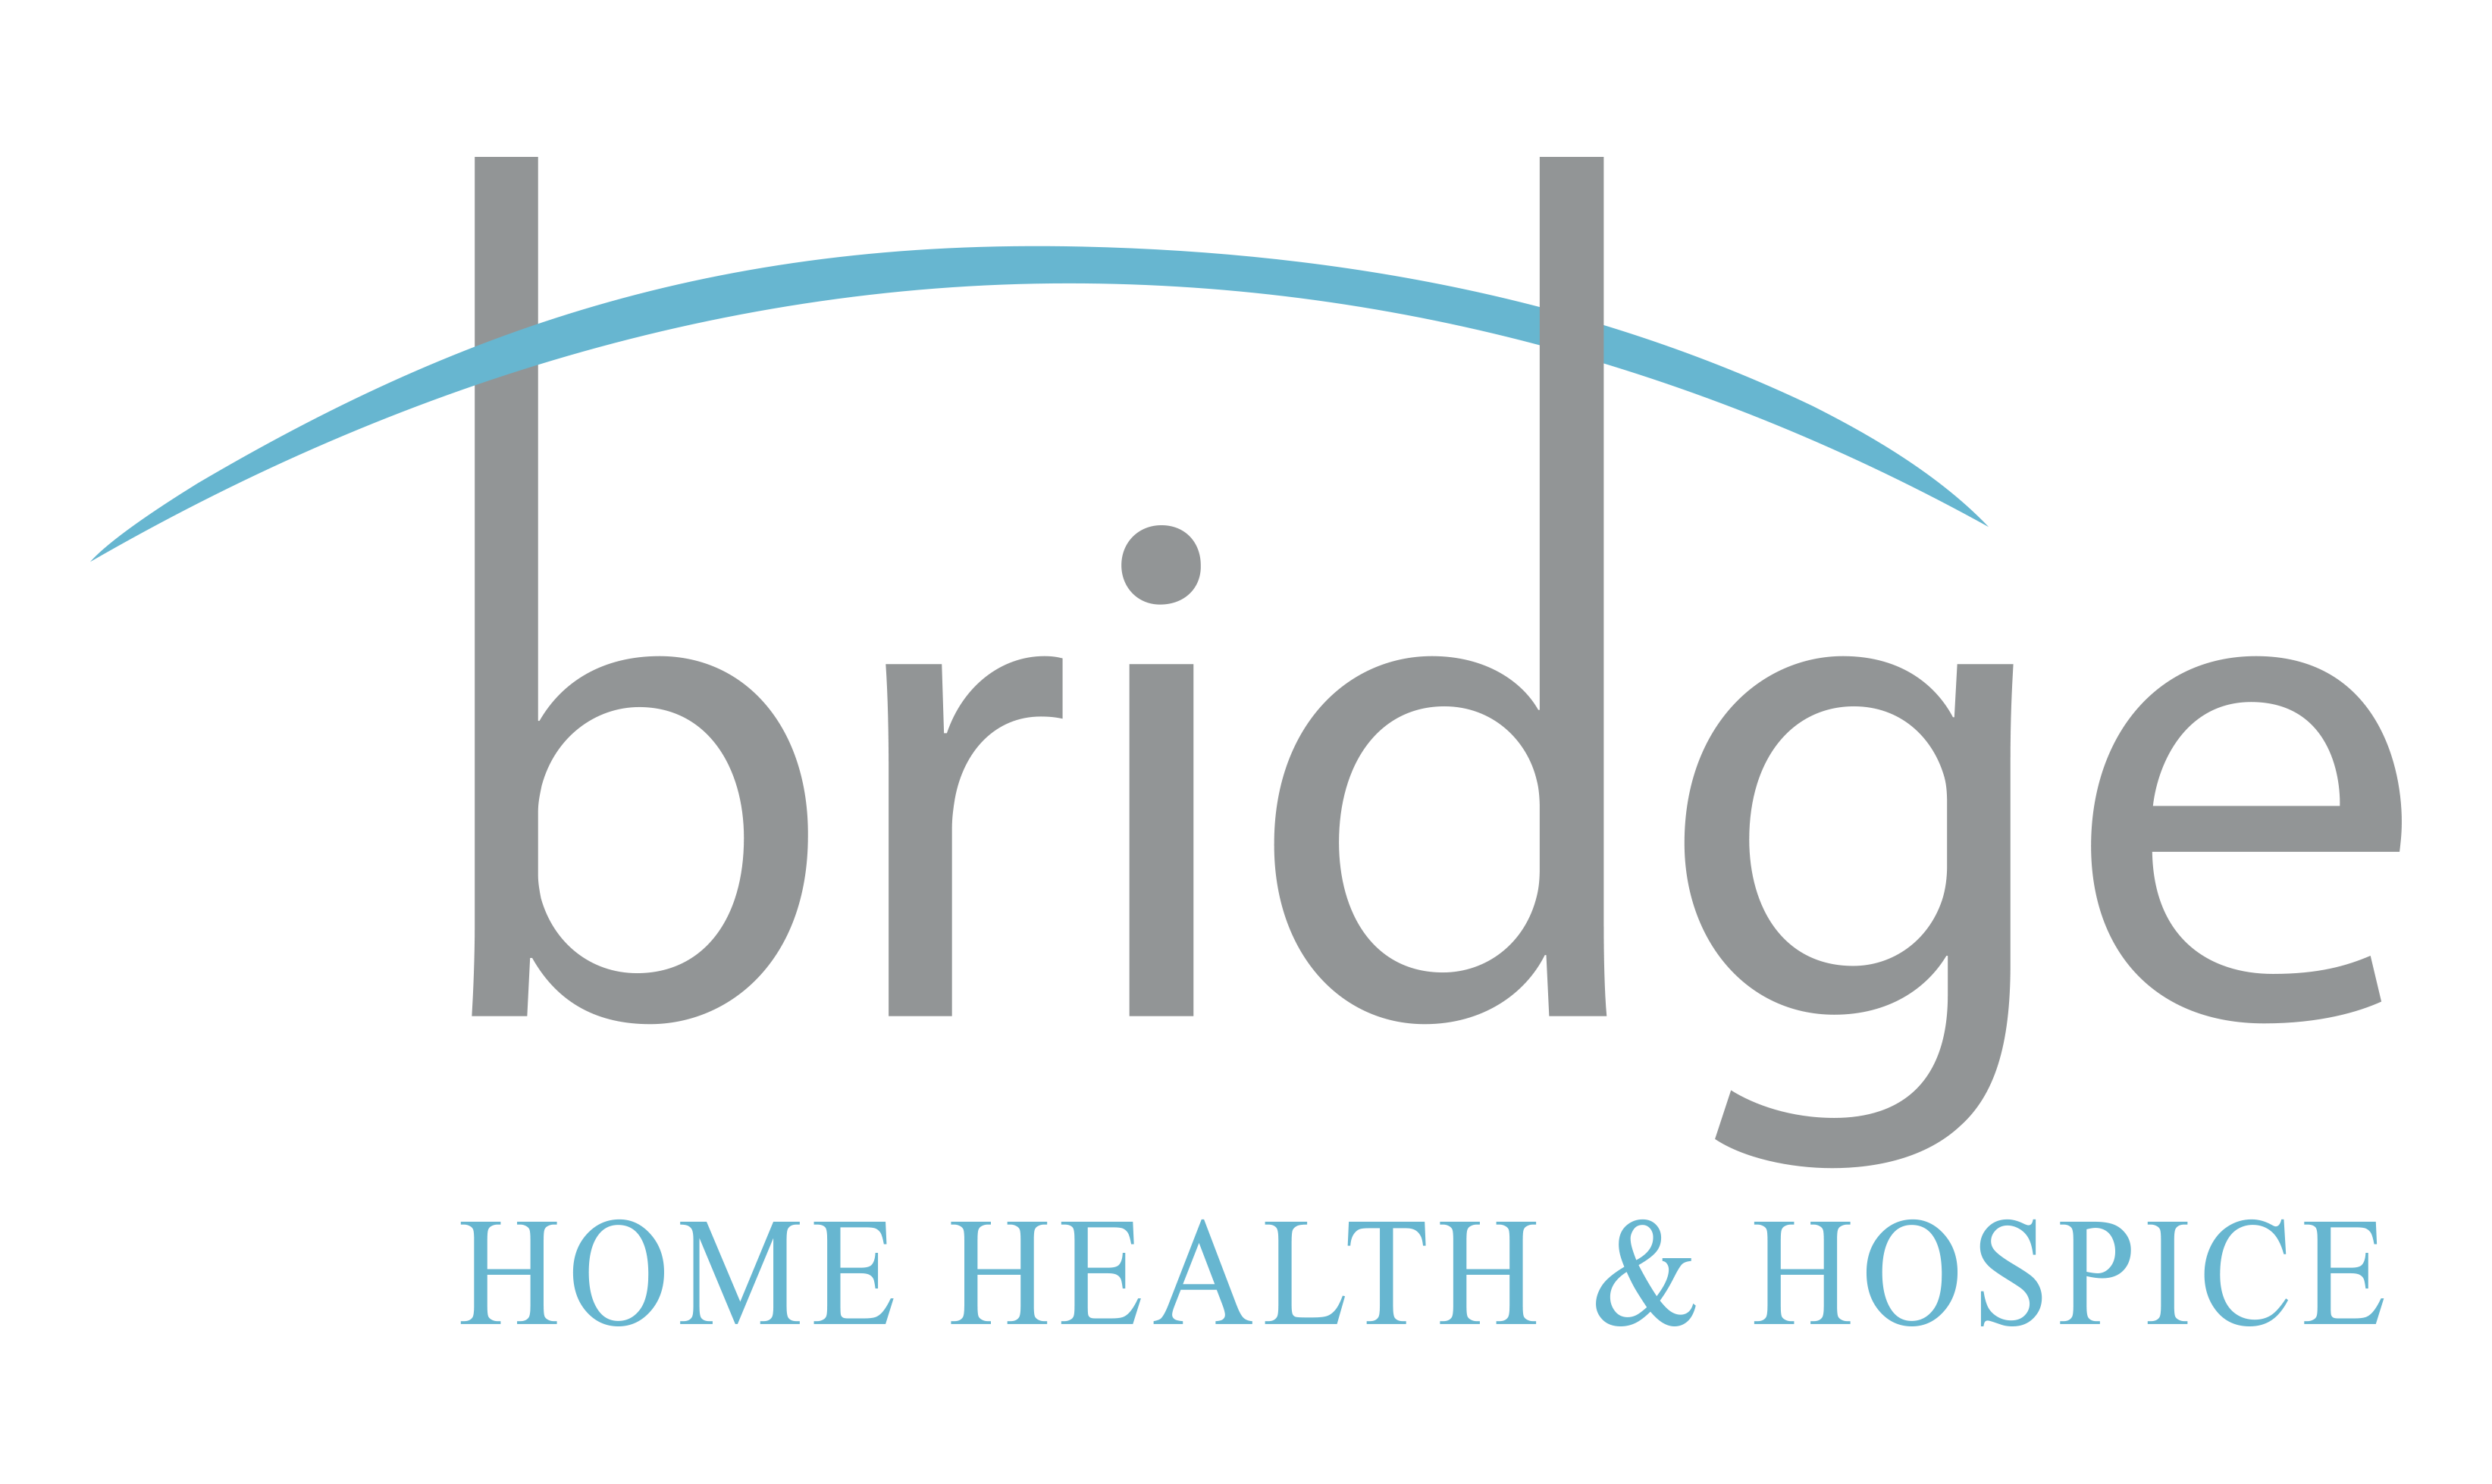 Bridge Home Health & Hospice